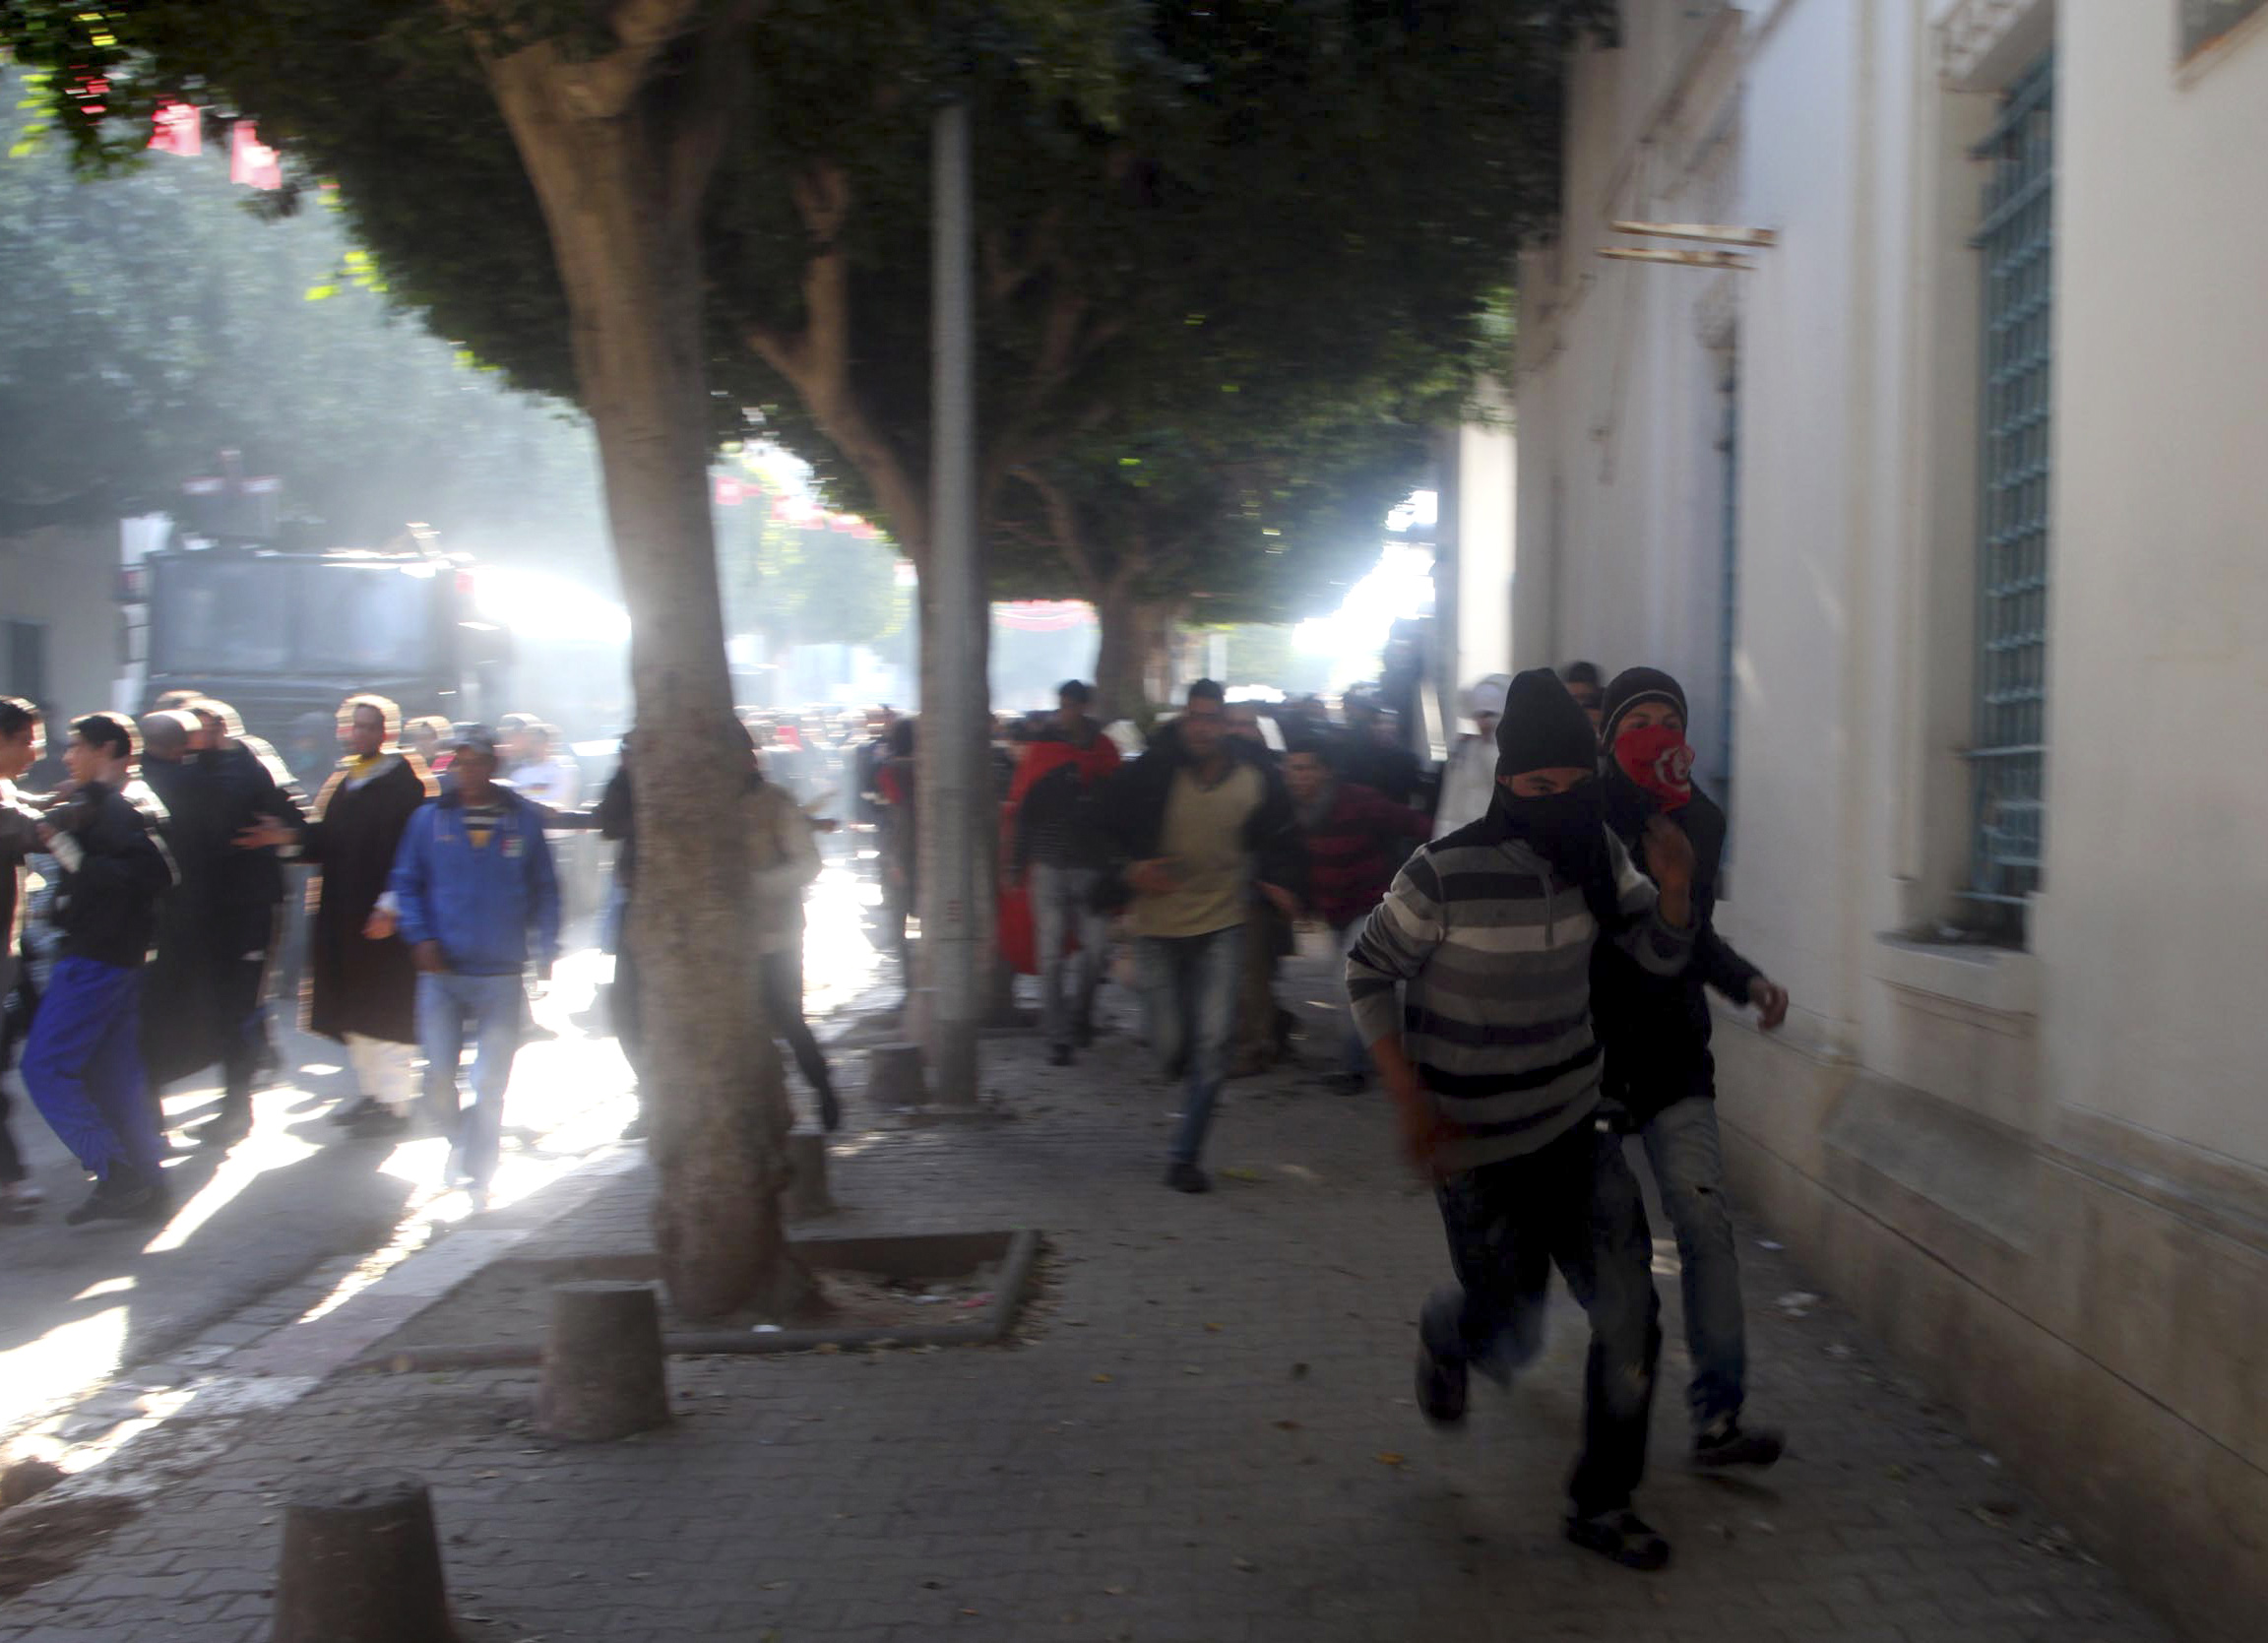 Demonstration, Jasminrevolutionen, Tunisien, Zine El Abidine Ben Ali, Upplopp, Kravaller, Uppror